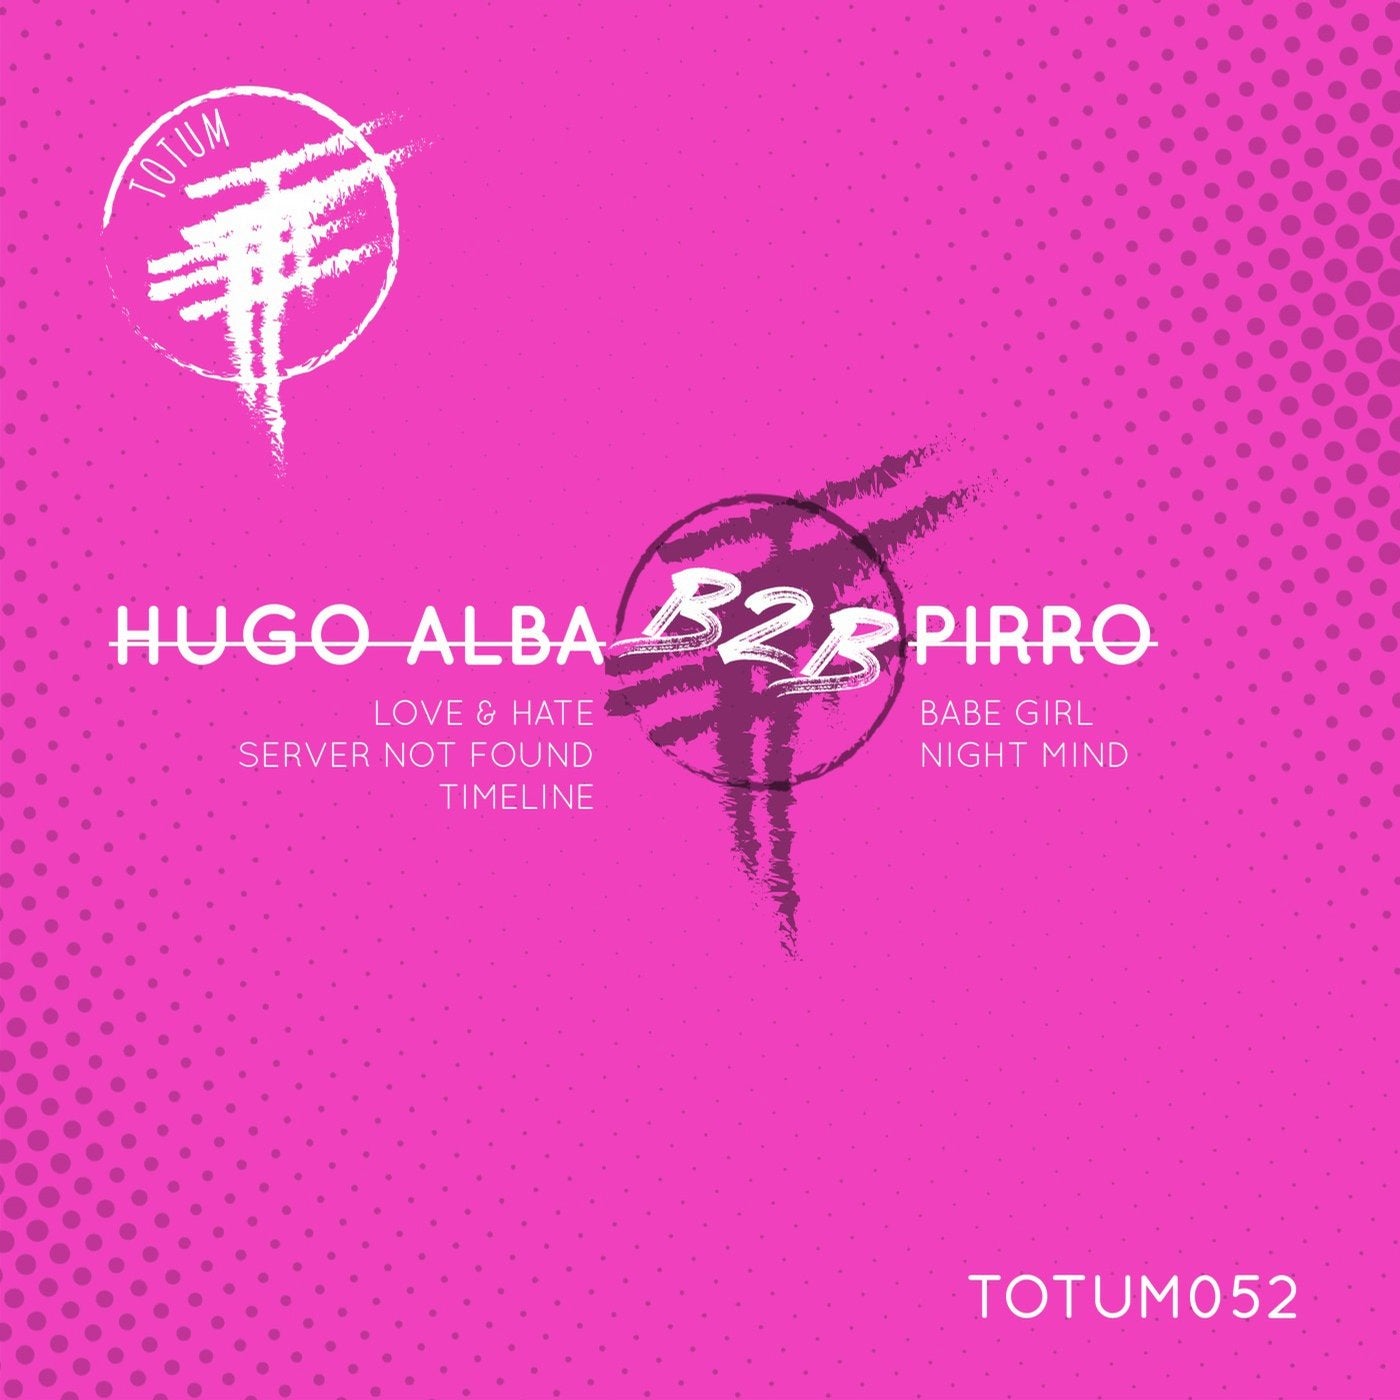 Hugo Alba B2B Pirro